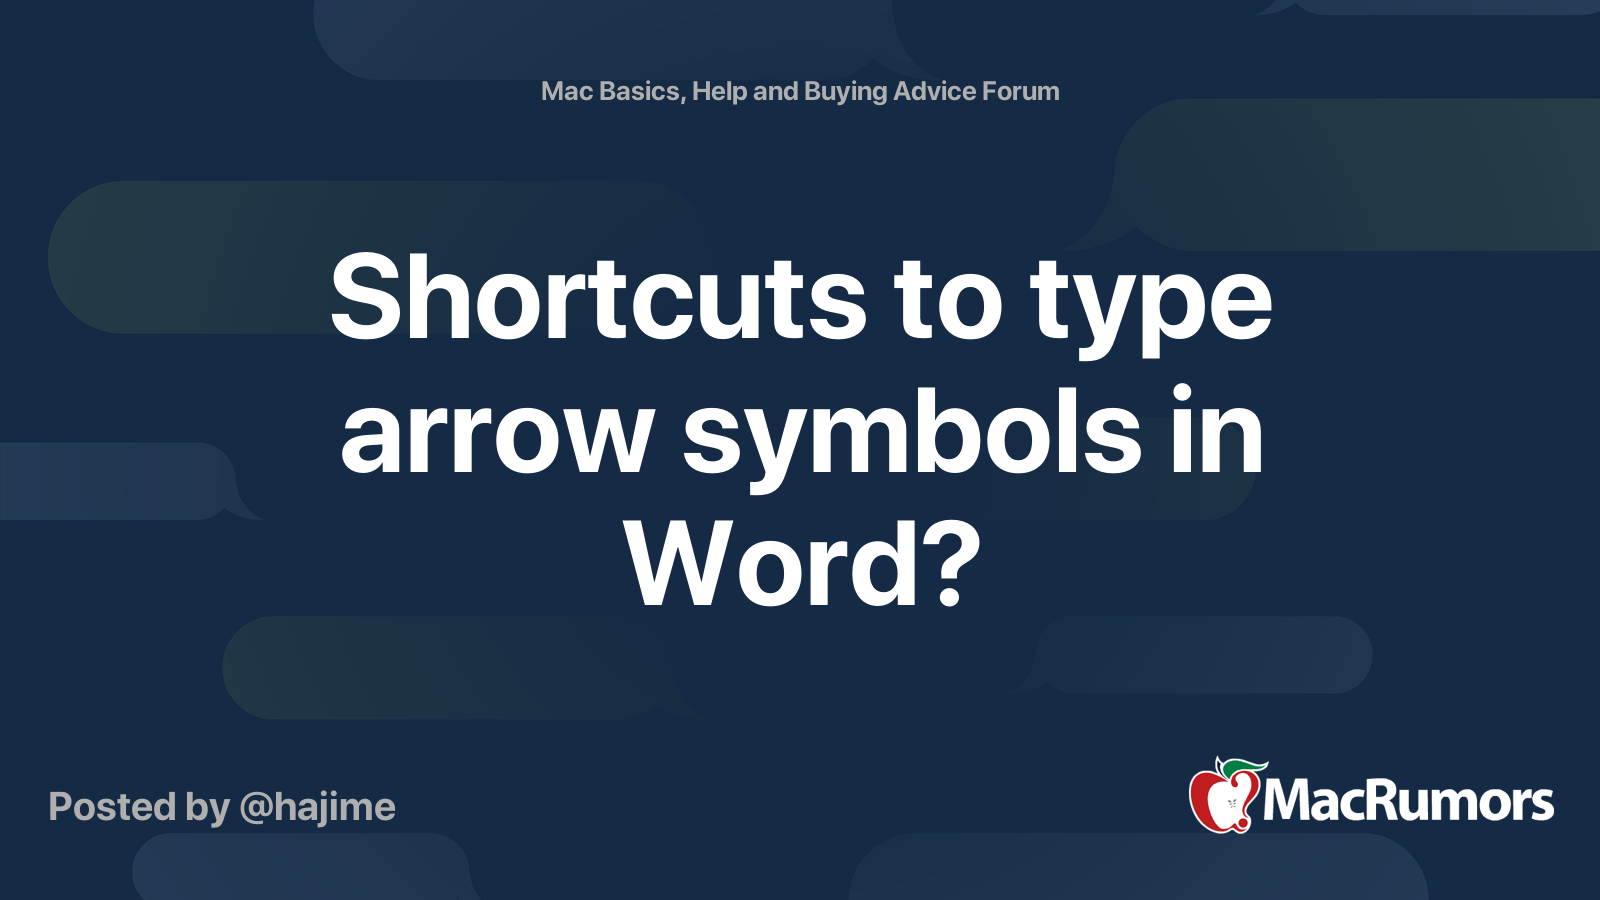 shortcuts-to-type-arrow-symbols-in-word-macrumors-forums